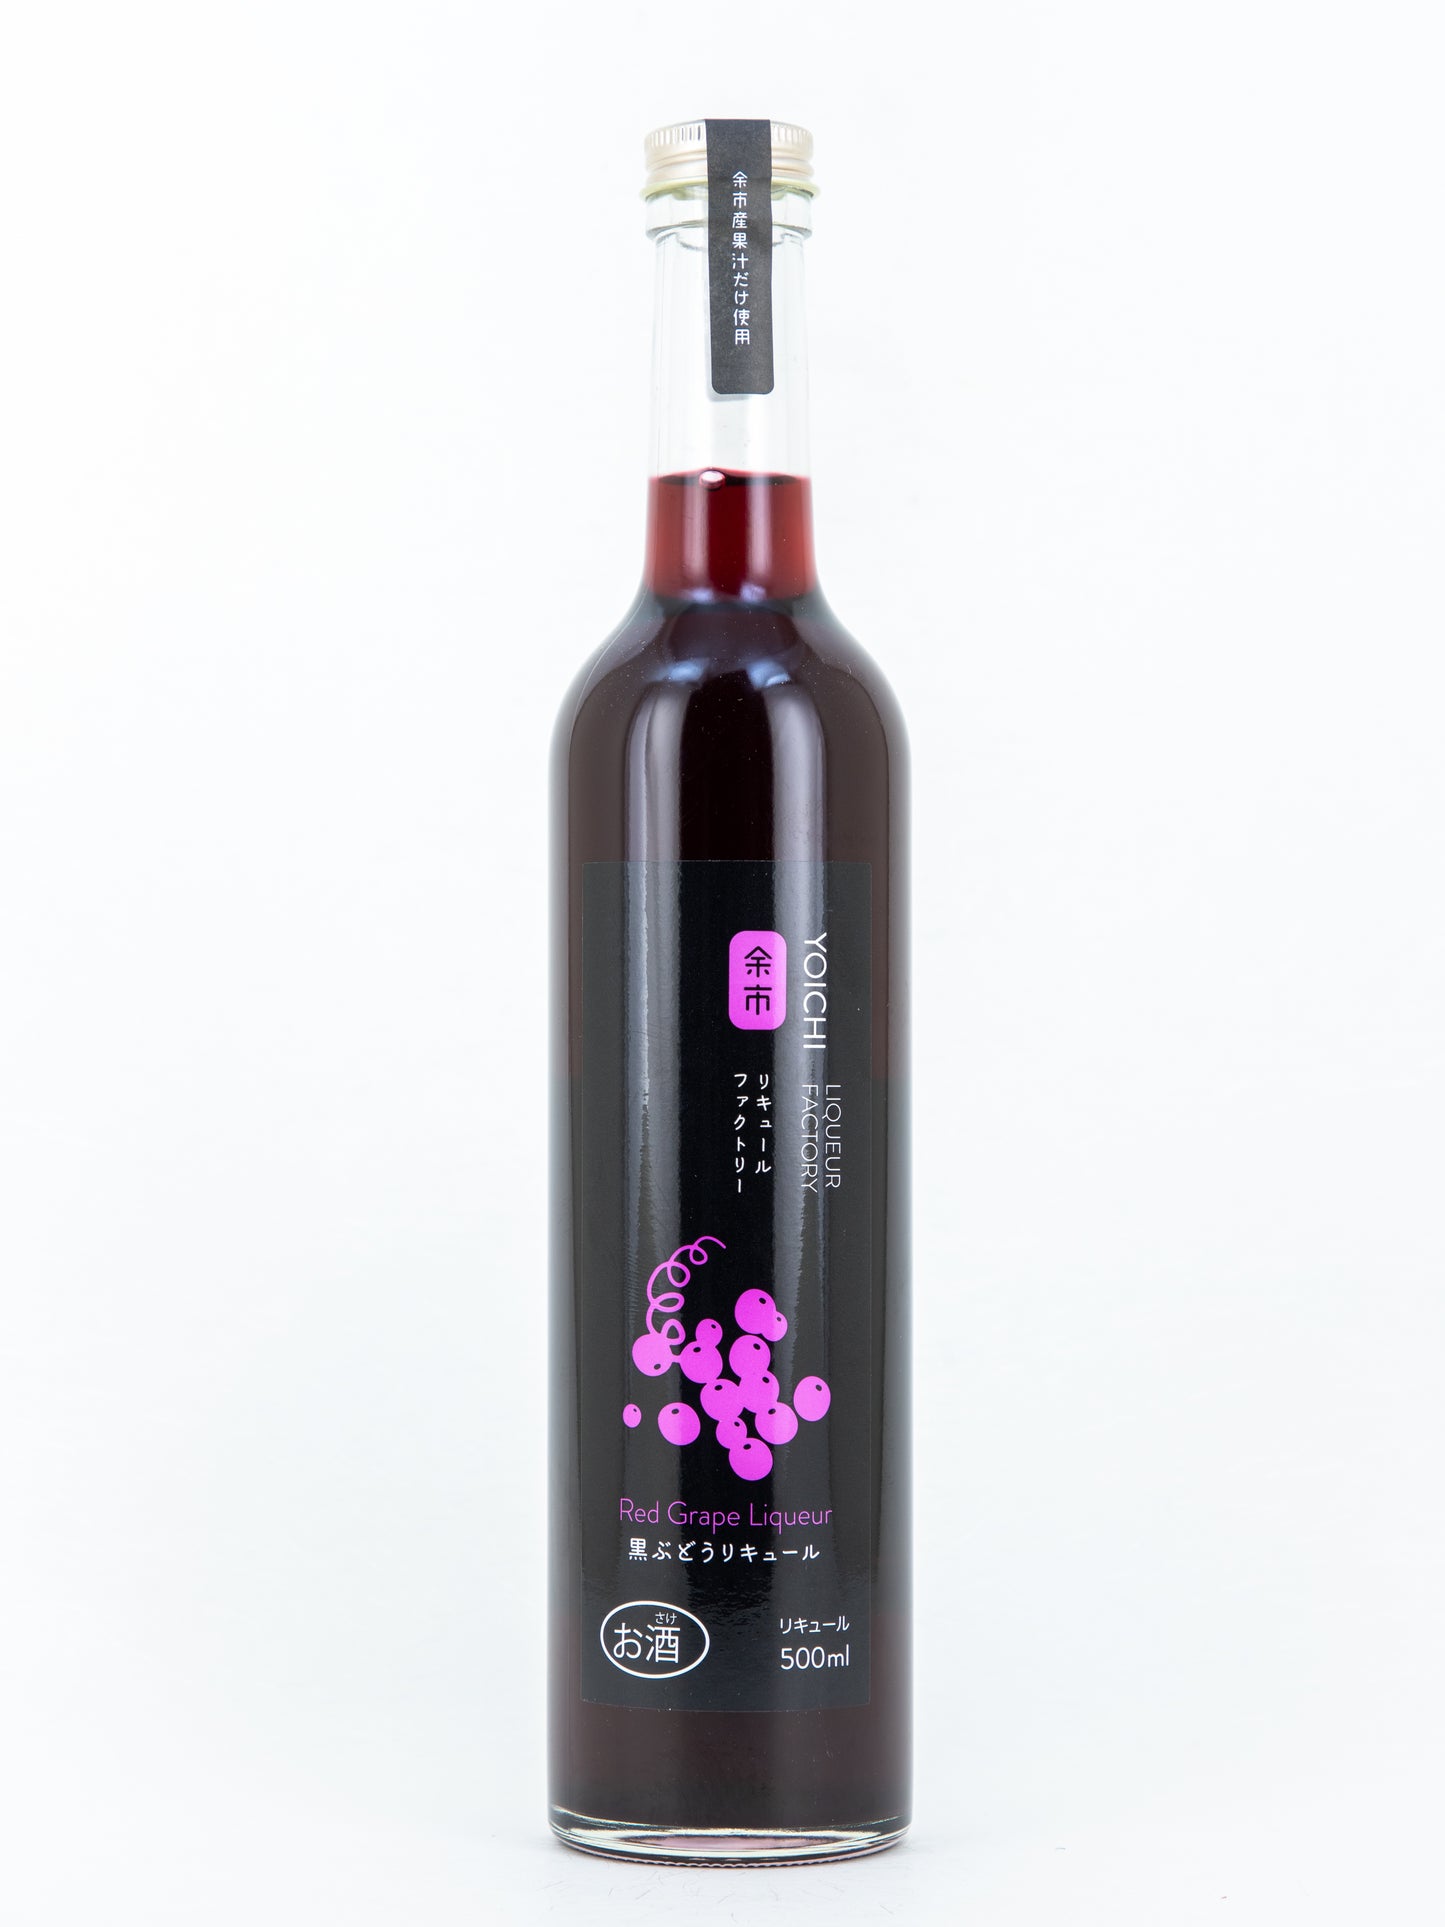 Yoichi Liqueur Factory Red Grape Liqueur